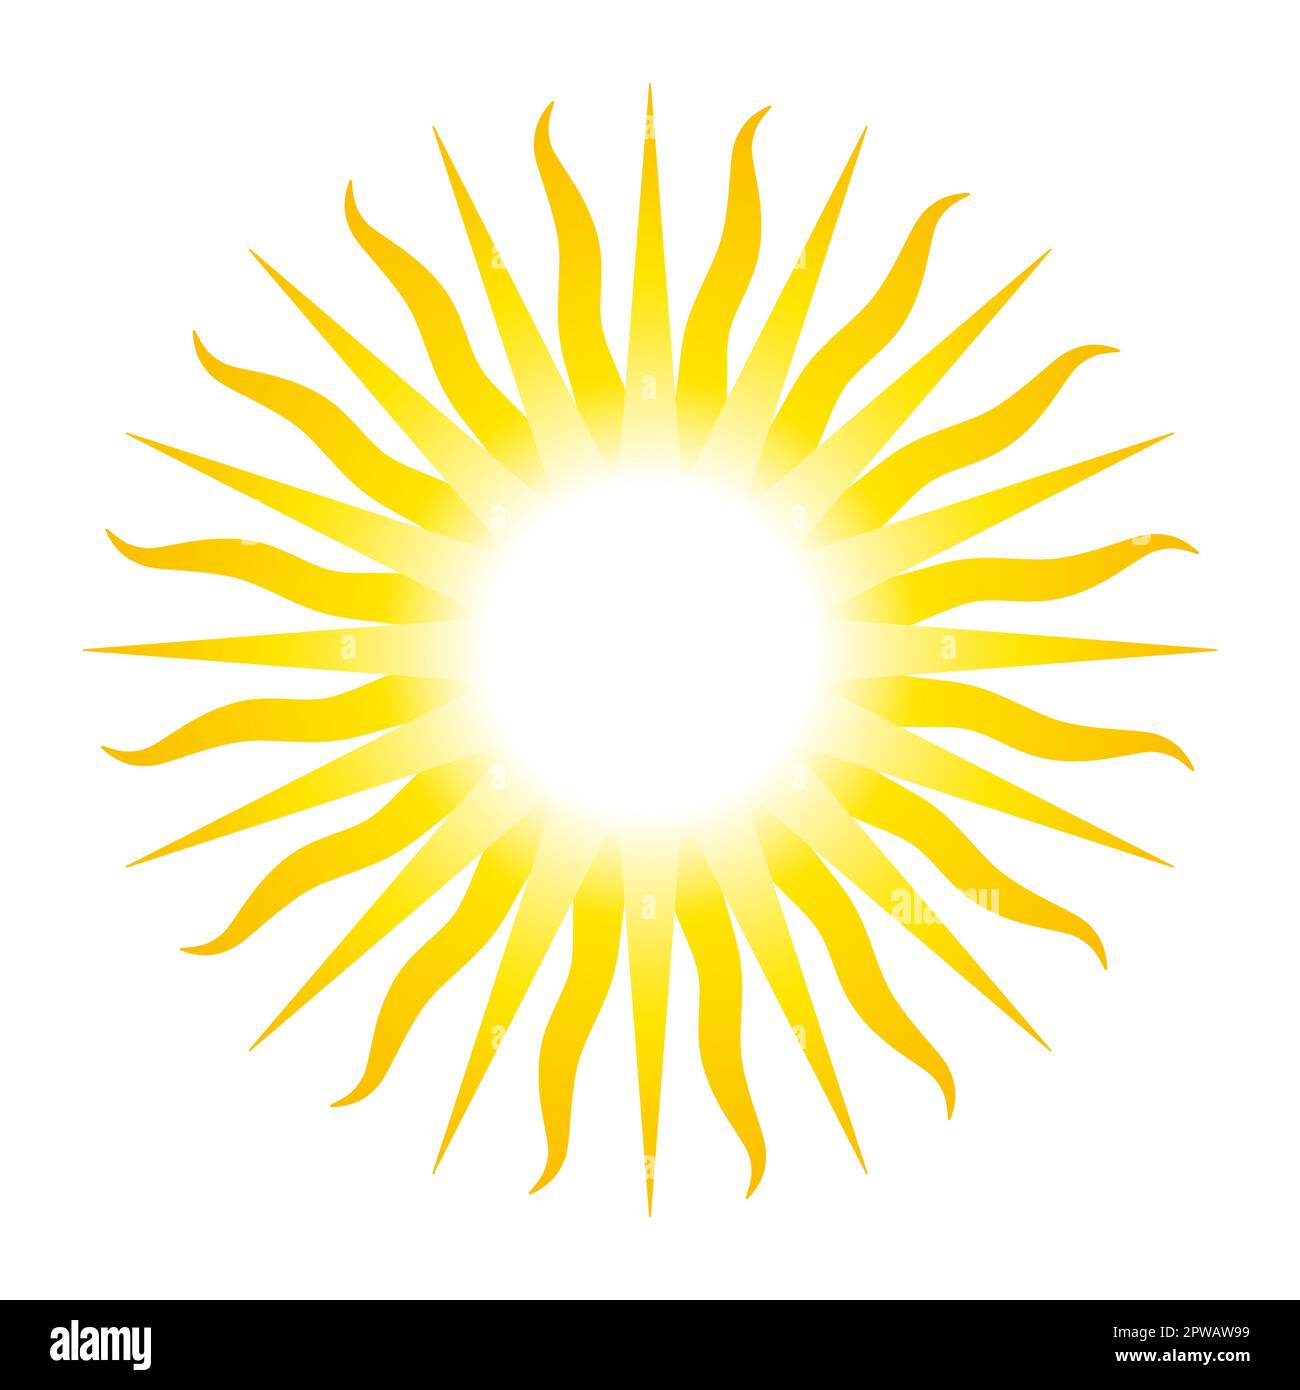 Sonnensymbol mit 32 Strahlen, analog zur Maisonne Stock Vektor